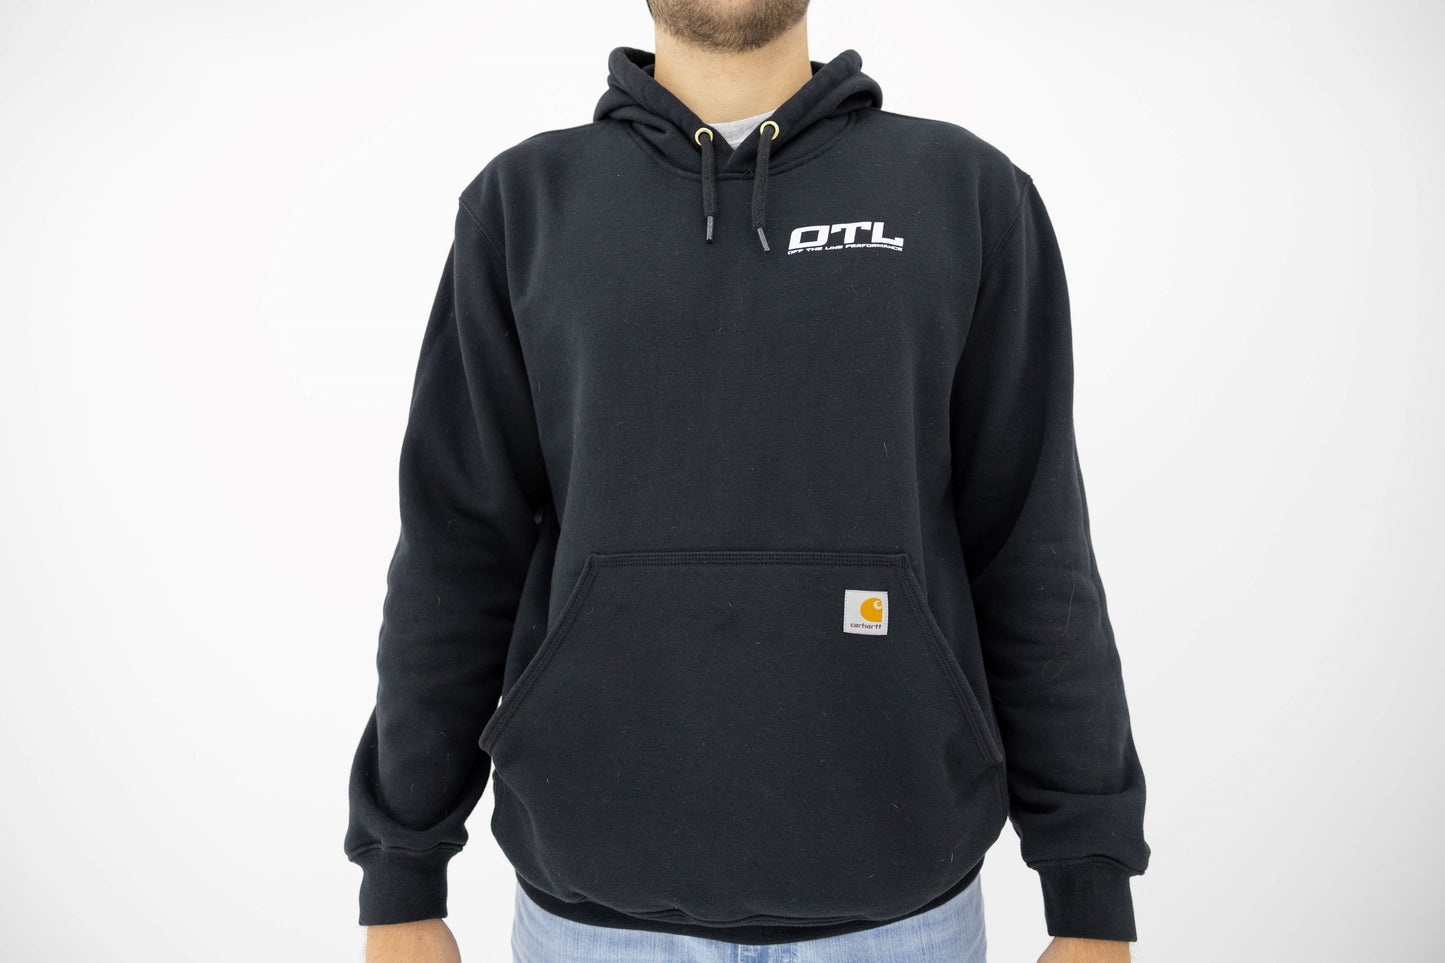 Carhartt x OTL hoodie